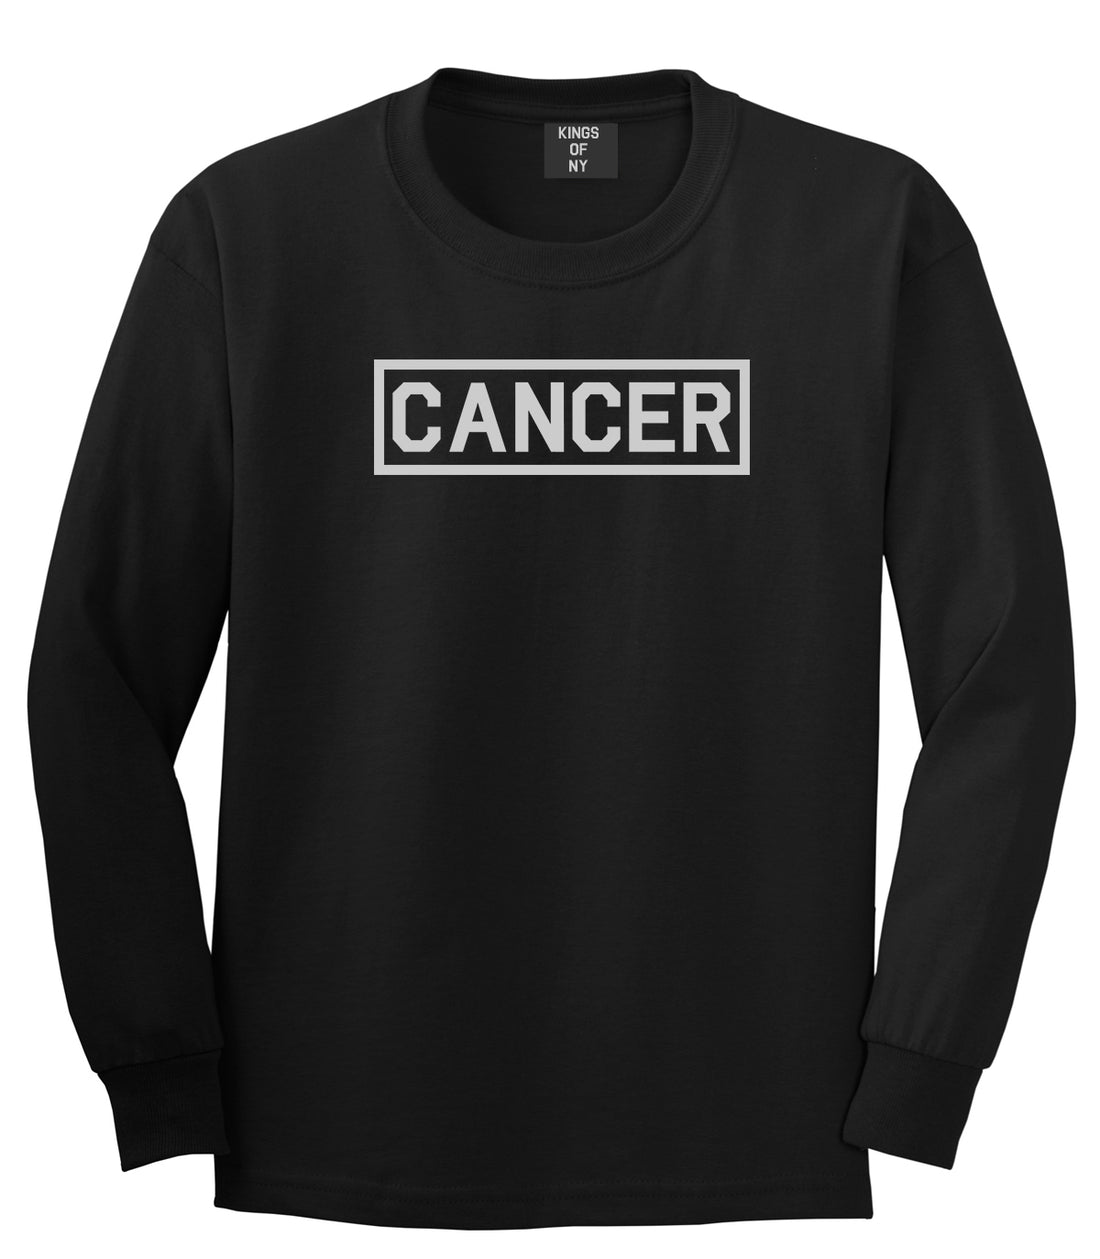 Cancer Horoscope Sign Mens Black Long Sleeve T-Shirt by KINGS OF NY